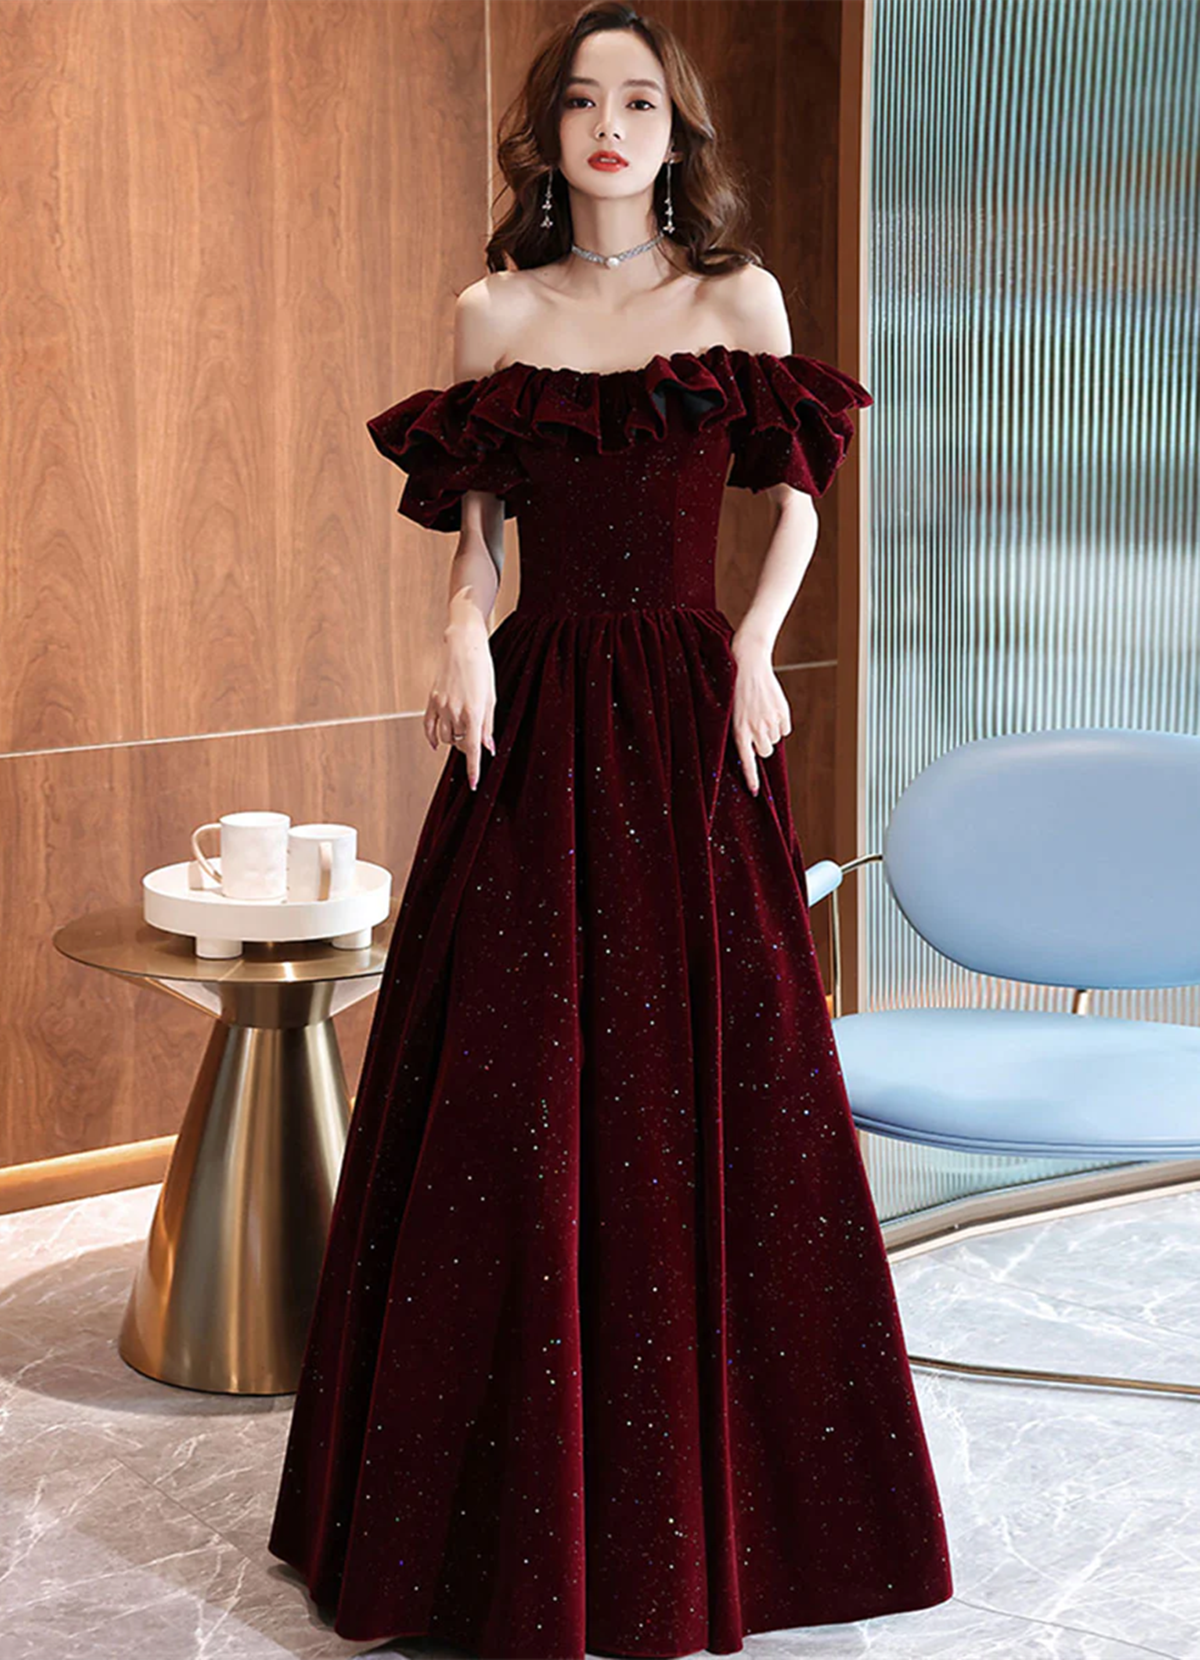 LOVECCROff Shoulder Wine Red Velvet A-line Party Dress, Wine Red Prom Dress